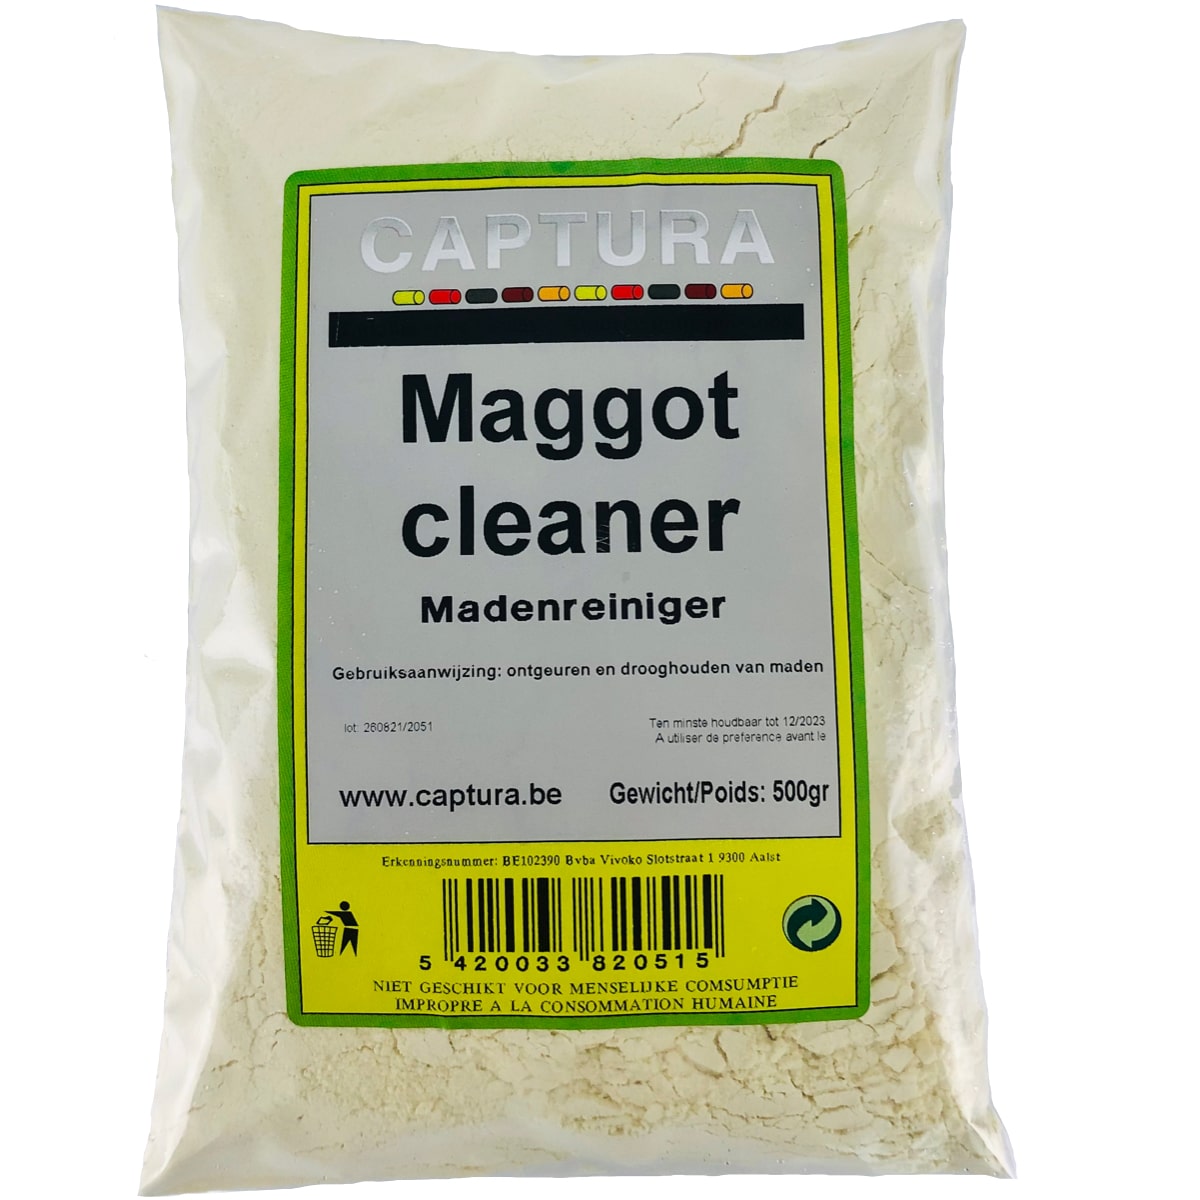 Captura maggot cleaner - madenreiniger 500g naturel